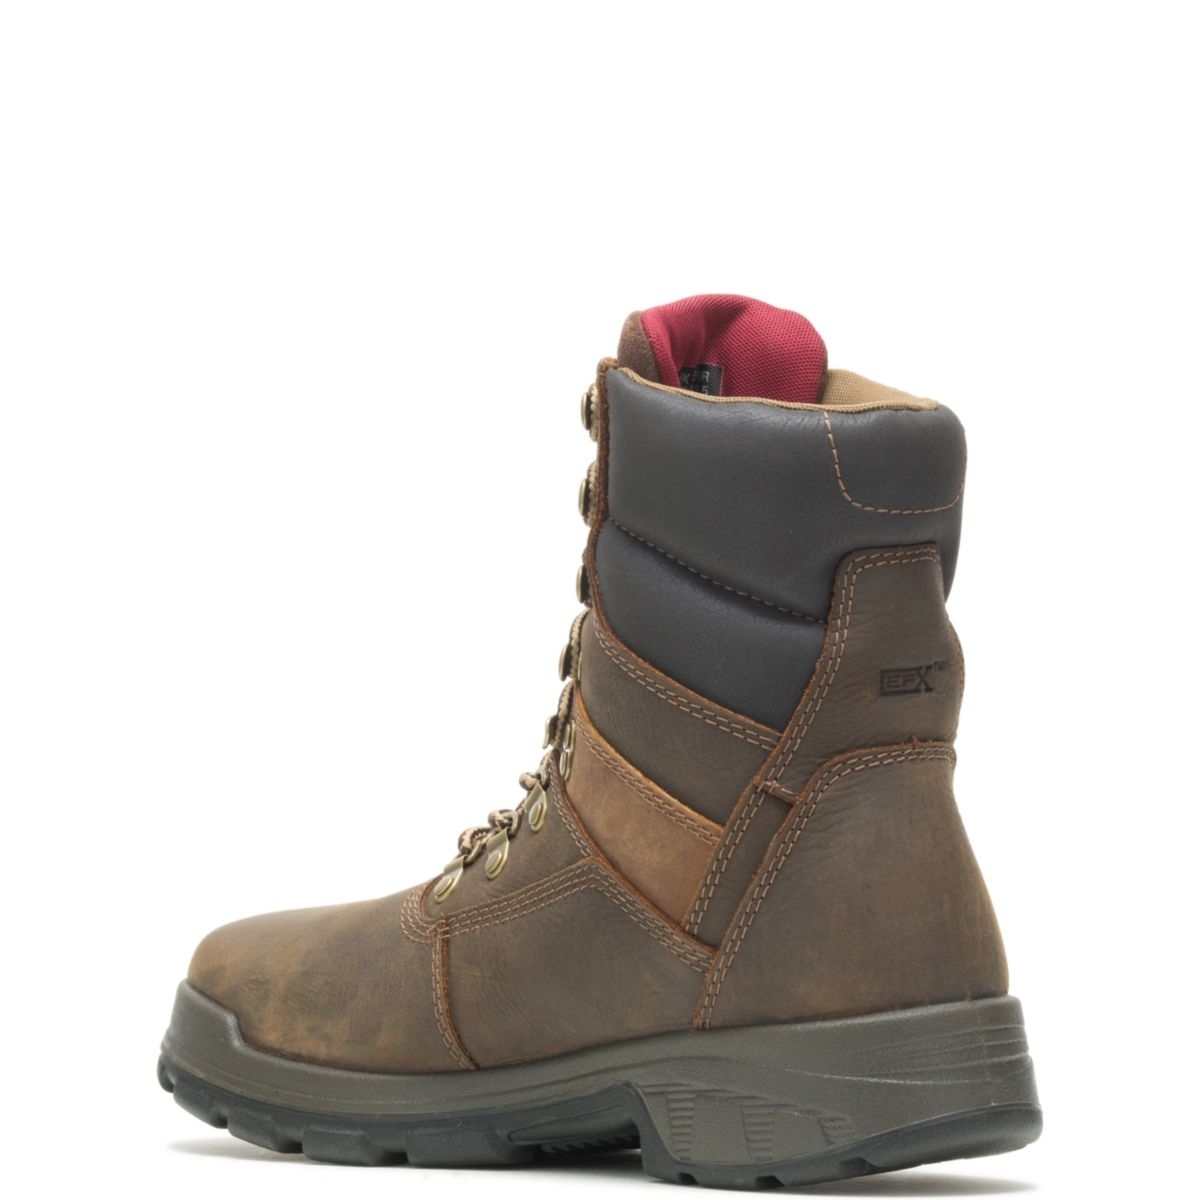 WOLVERINE Men's Cabor EPXÂ® 8 Waterproof Composite Toe Work Boot Dark Brown - W10316 BROWN - BROWN, 7 X-Wide